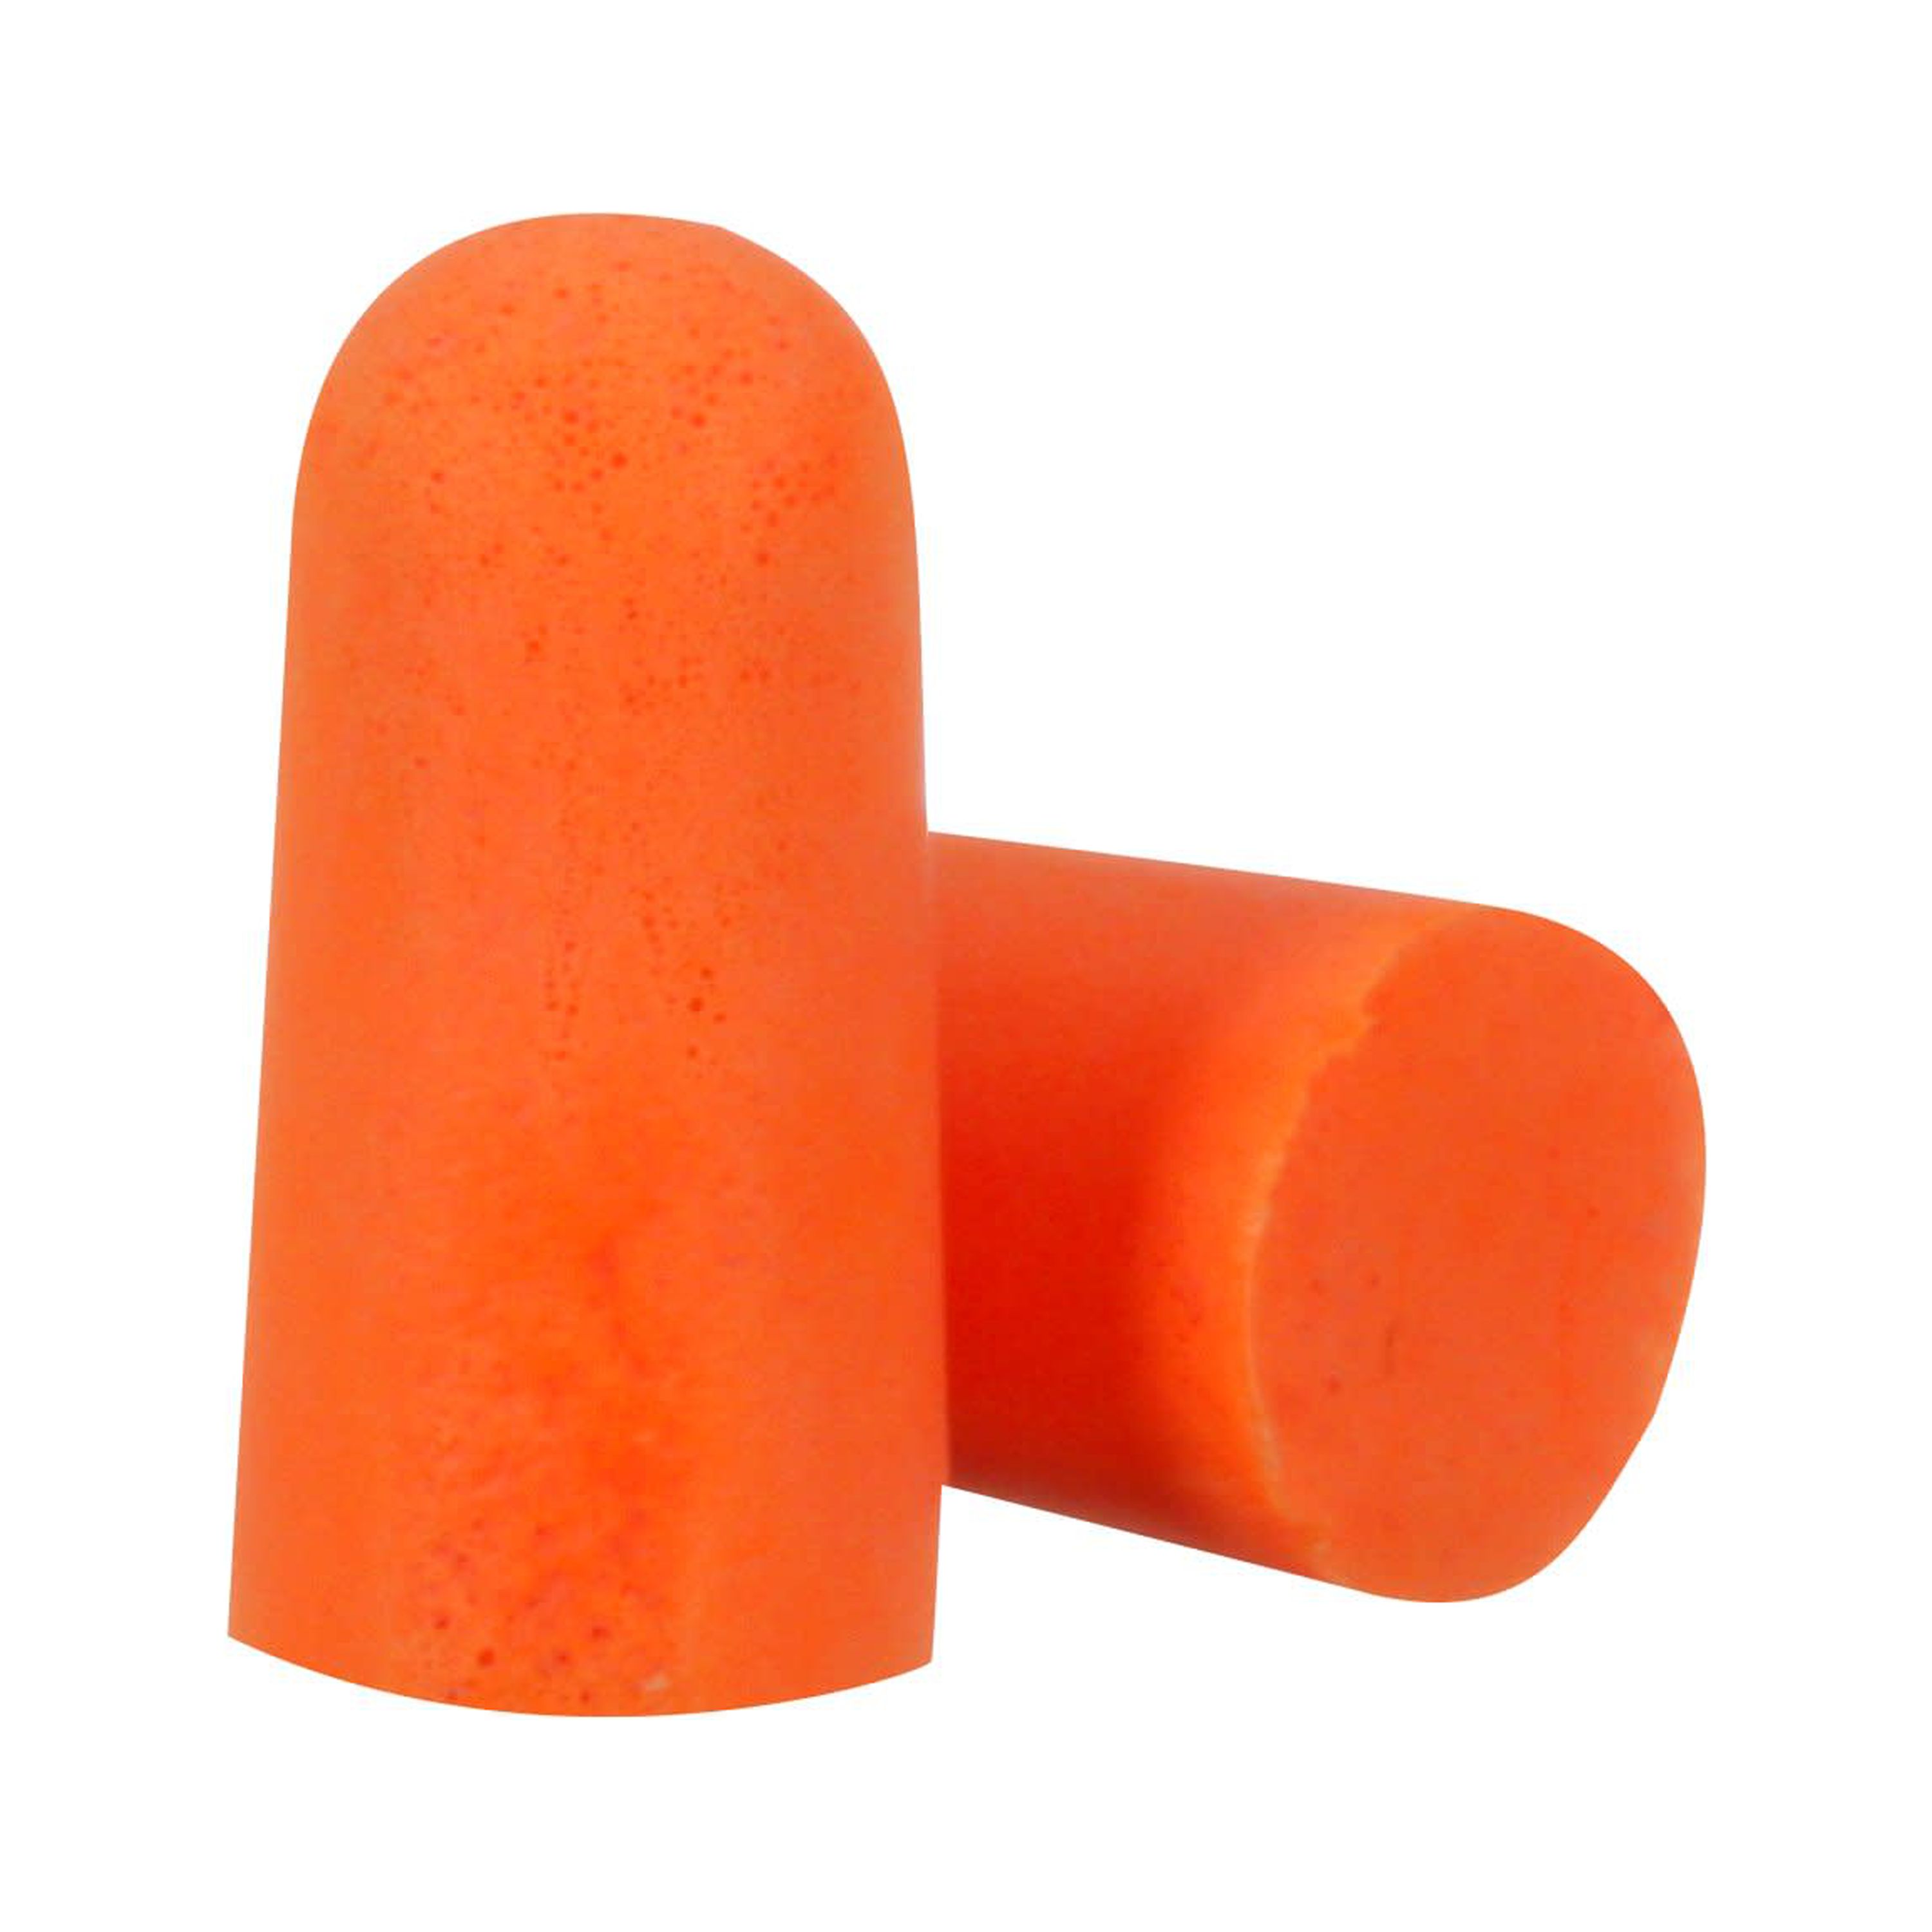 3M Soft Foam Disposable Ear Plugs, Orange, 92077H8-DC, 32 Db, 8 Pair - image 4 of 5